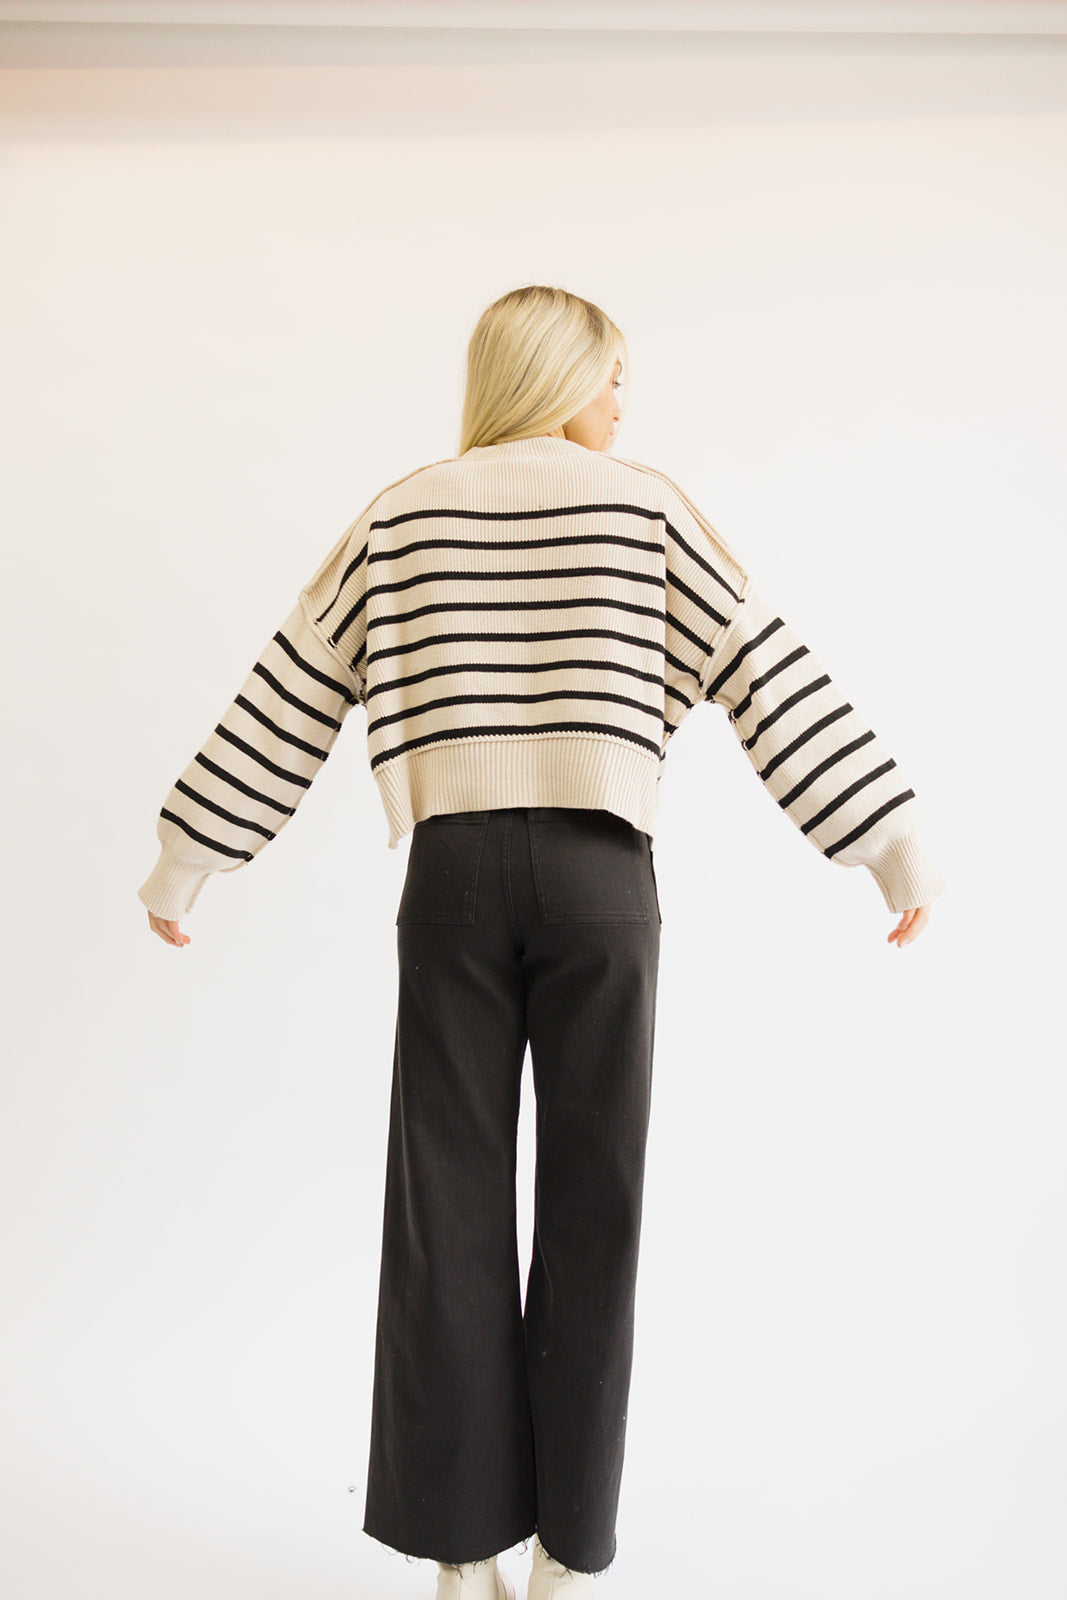 Savannah Striped Sweater